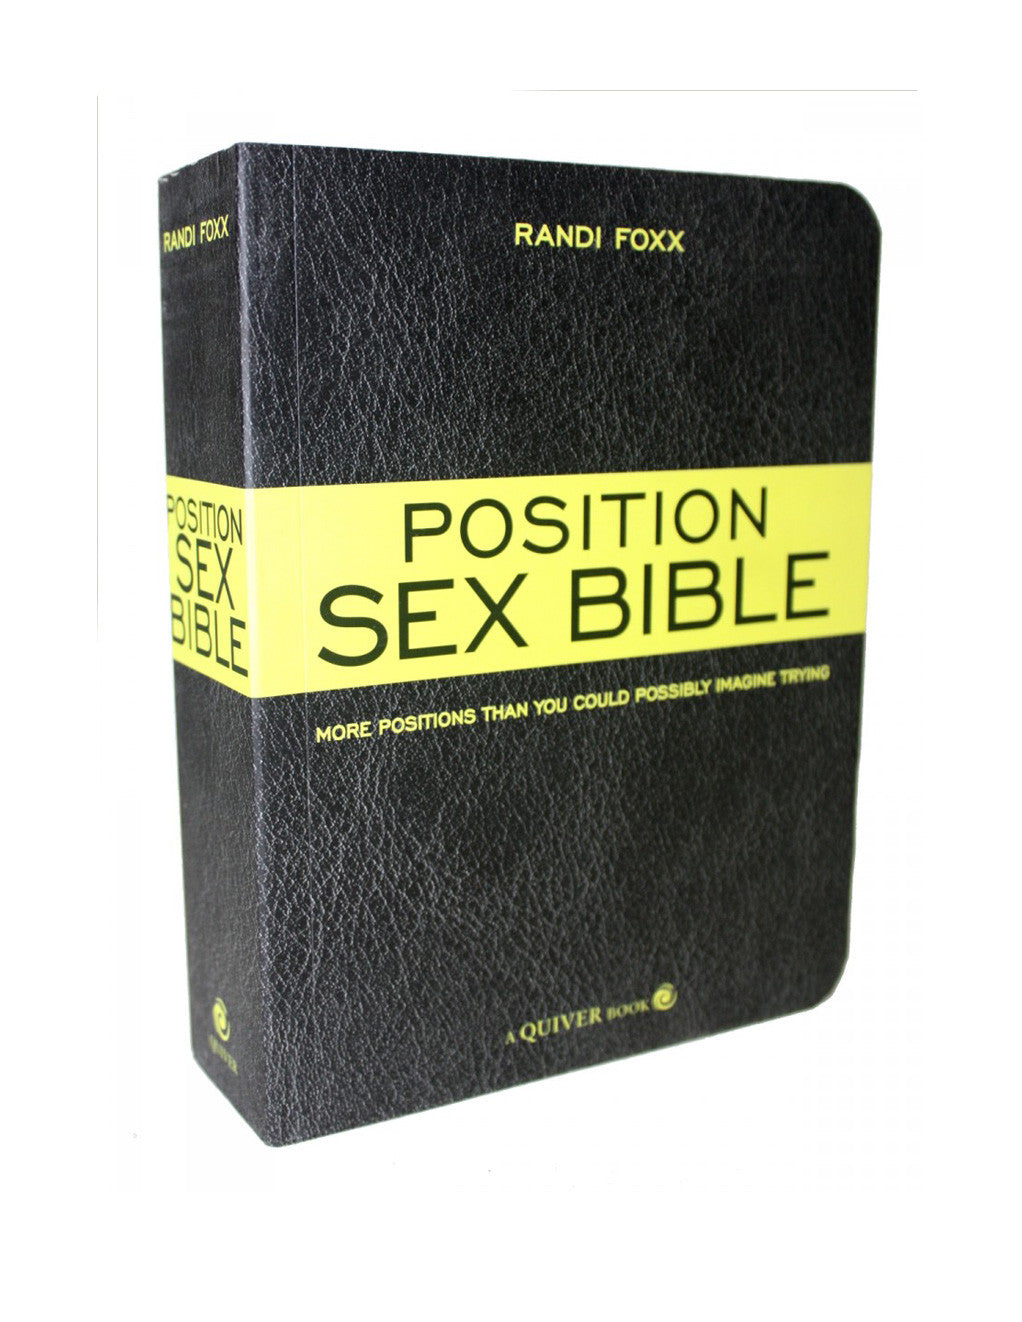 Position Sex Bible by Randi Foxx